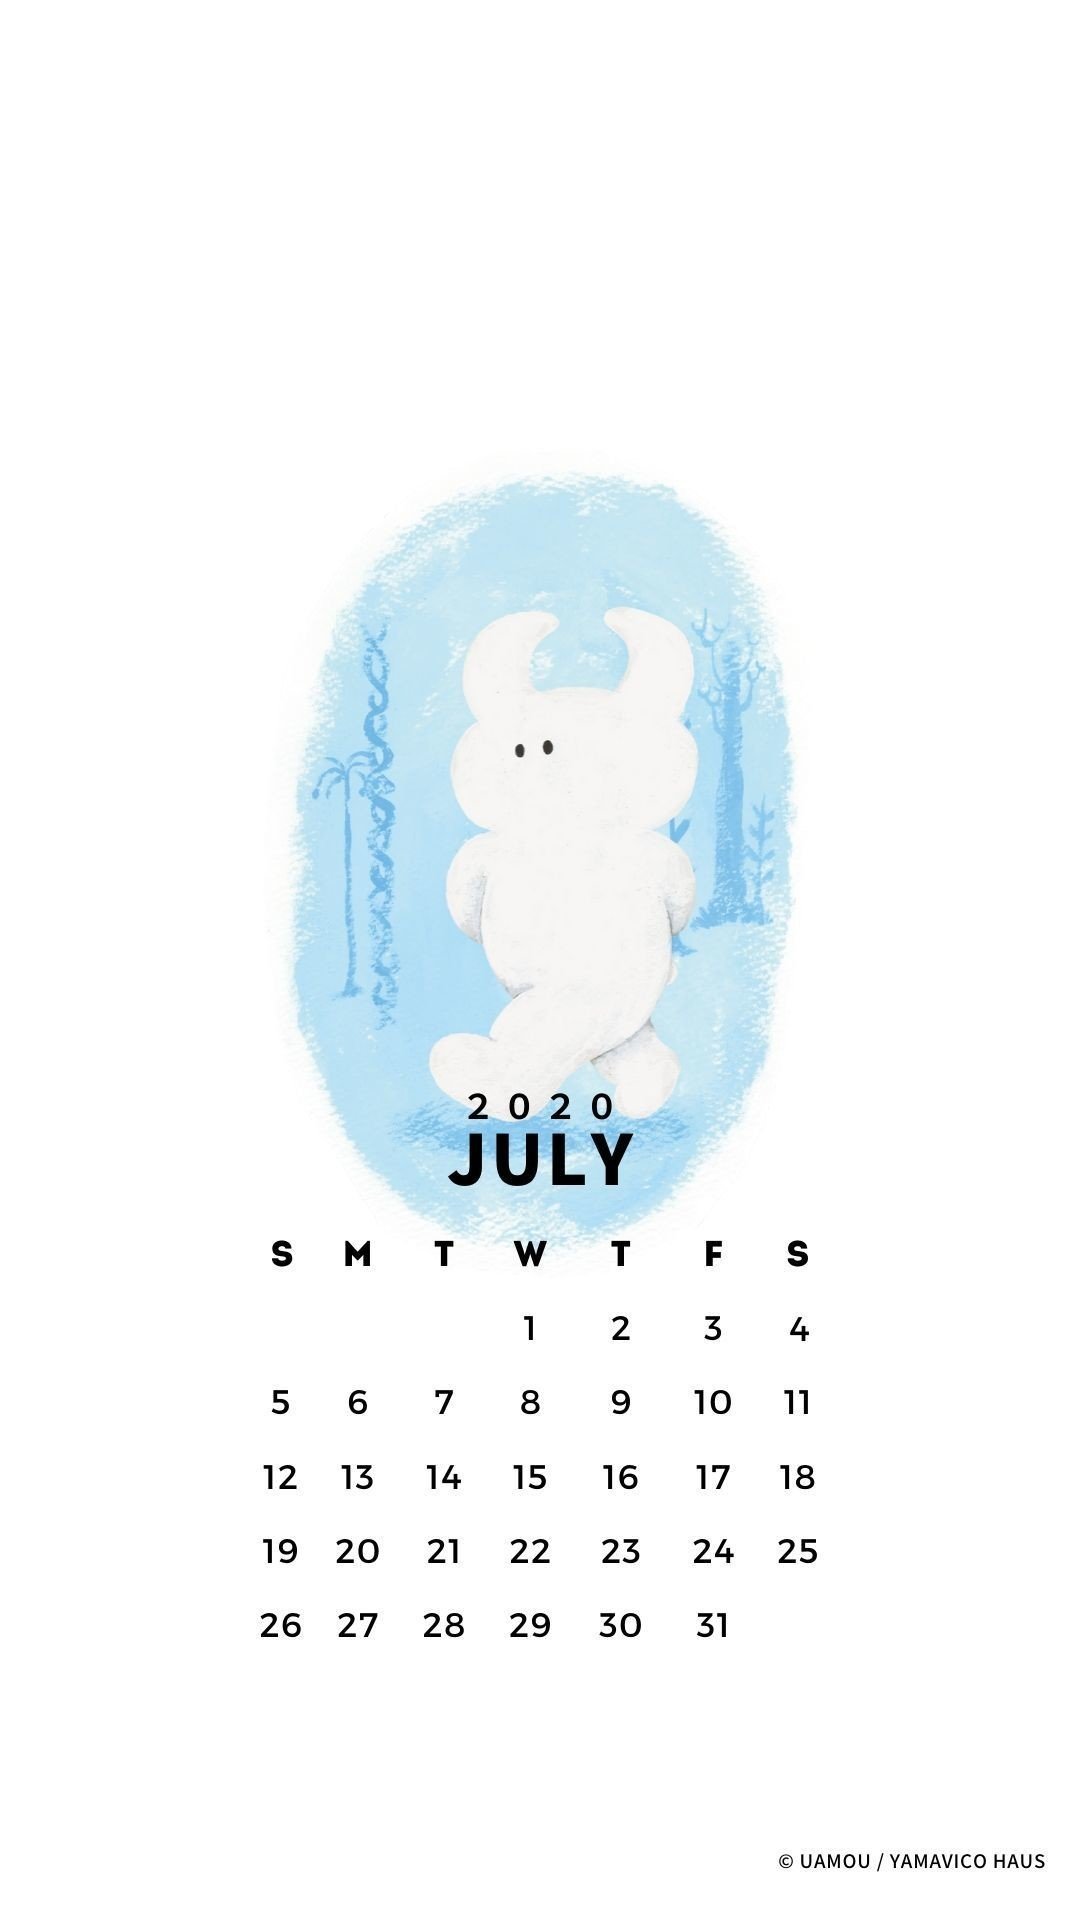 Uamou絵本シリーズ2作目制作記念 スマートフォン壁紙カレンダーをプレゼント Yamavico Haus Note